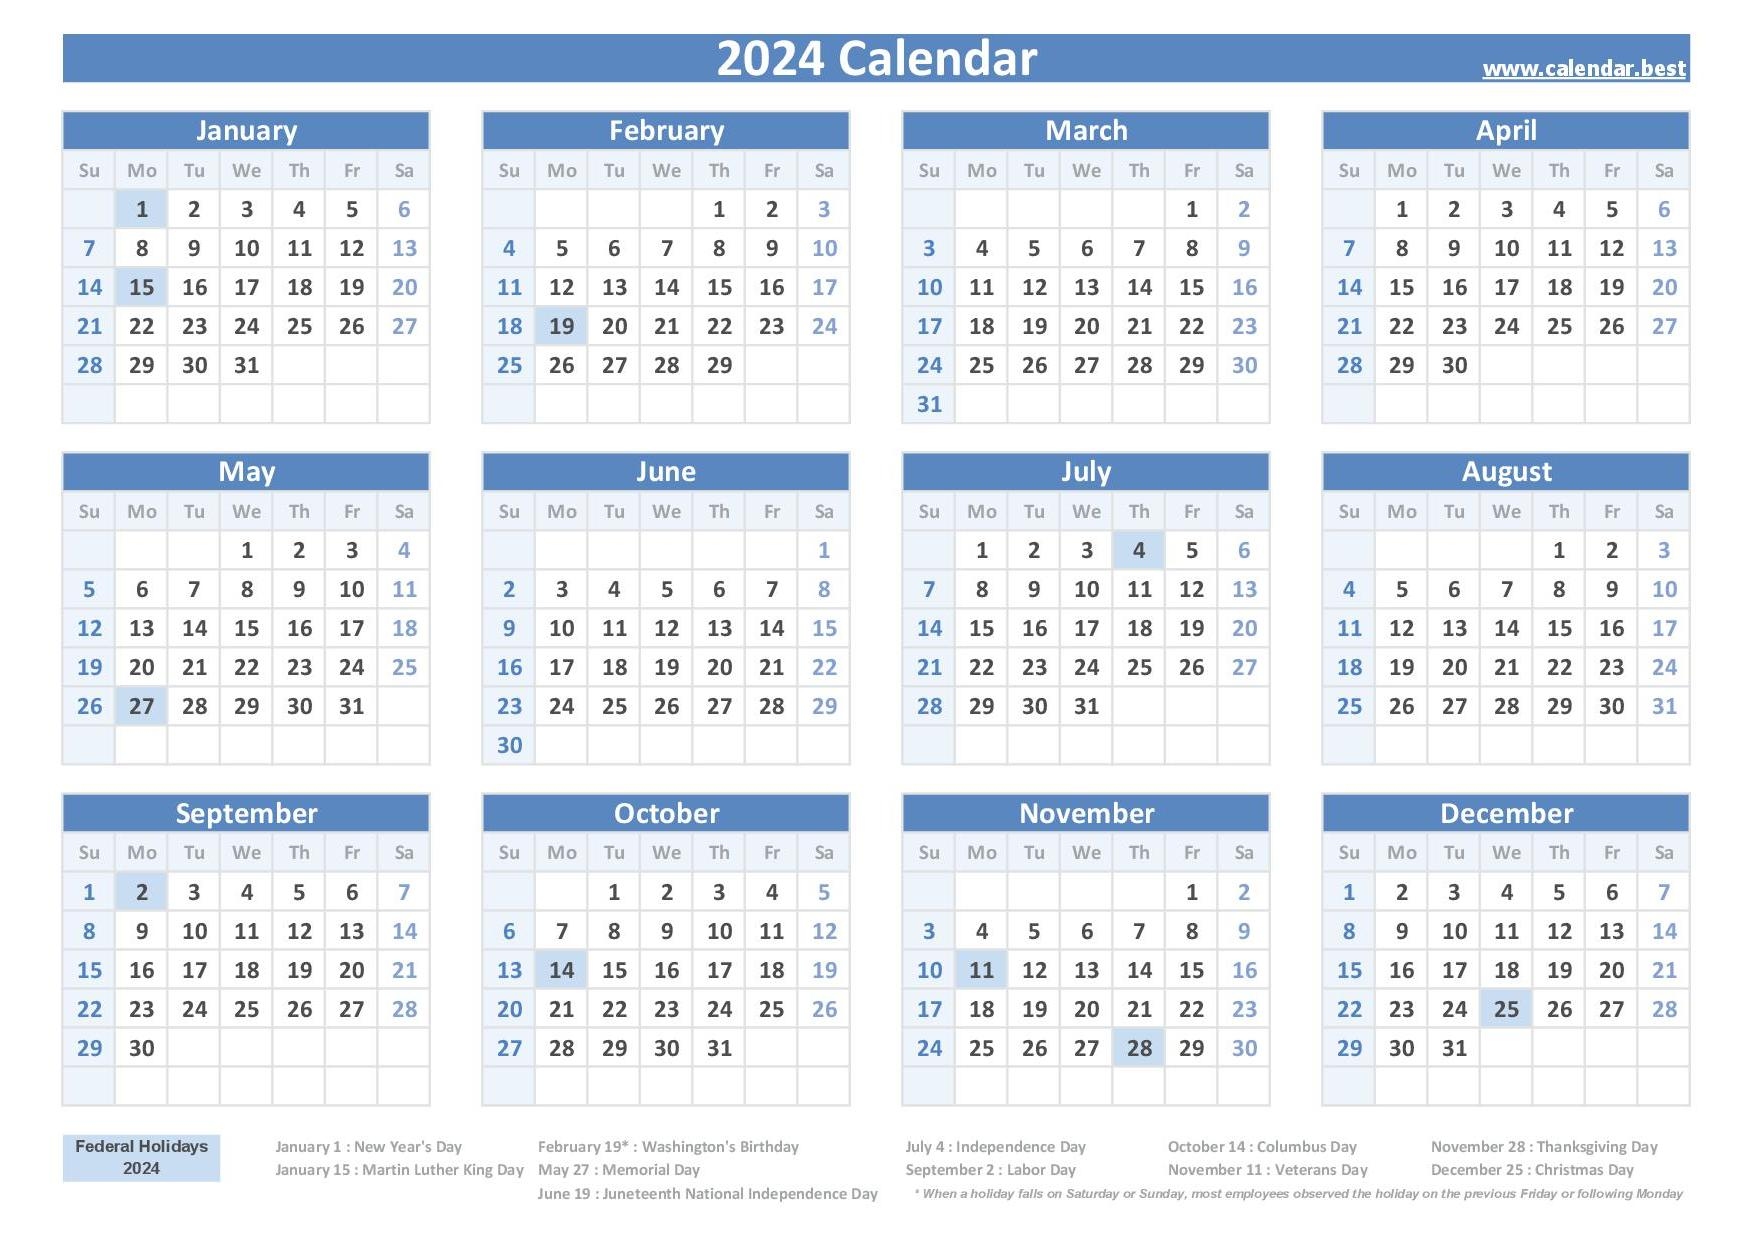 2024 Us Federal Holiday Calendar Printable Bill Marjie - Free Printable 2024 Calendar With Holidays Cute